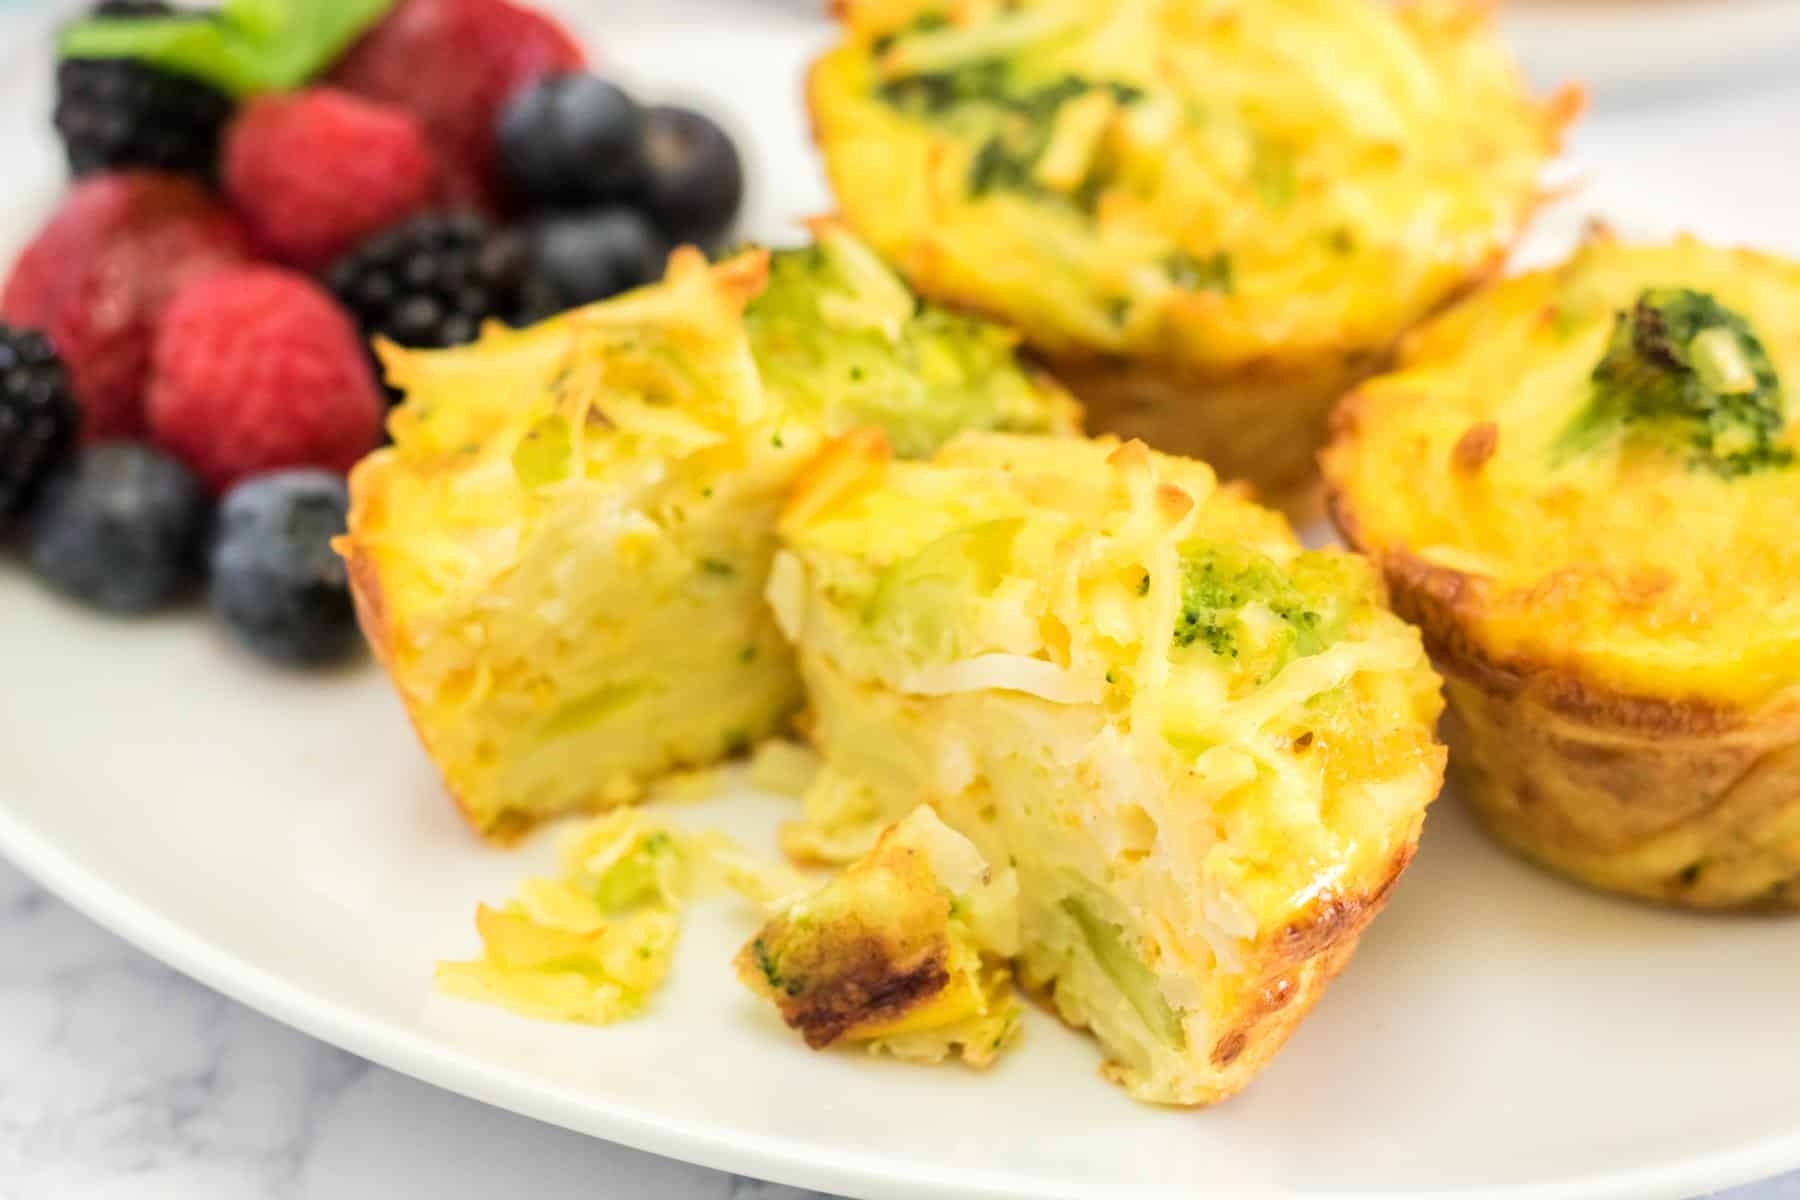 https://cupcakesandkalechips.com/wp-content/uploads/2021/08/Broccoli-Potato-Cheese-Egg-Muffins-Recipe-18.jpg